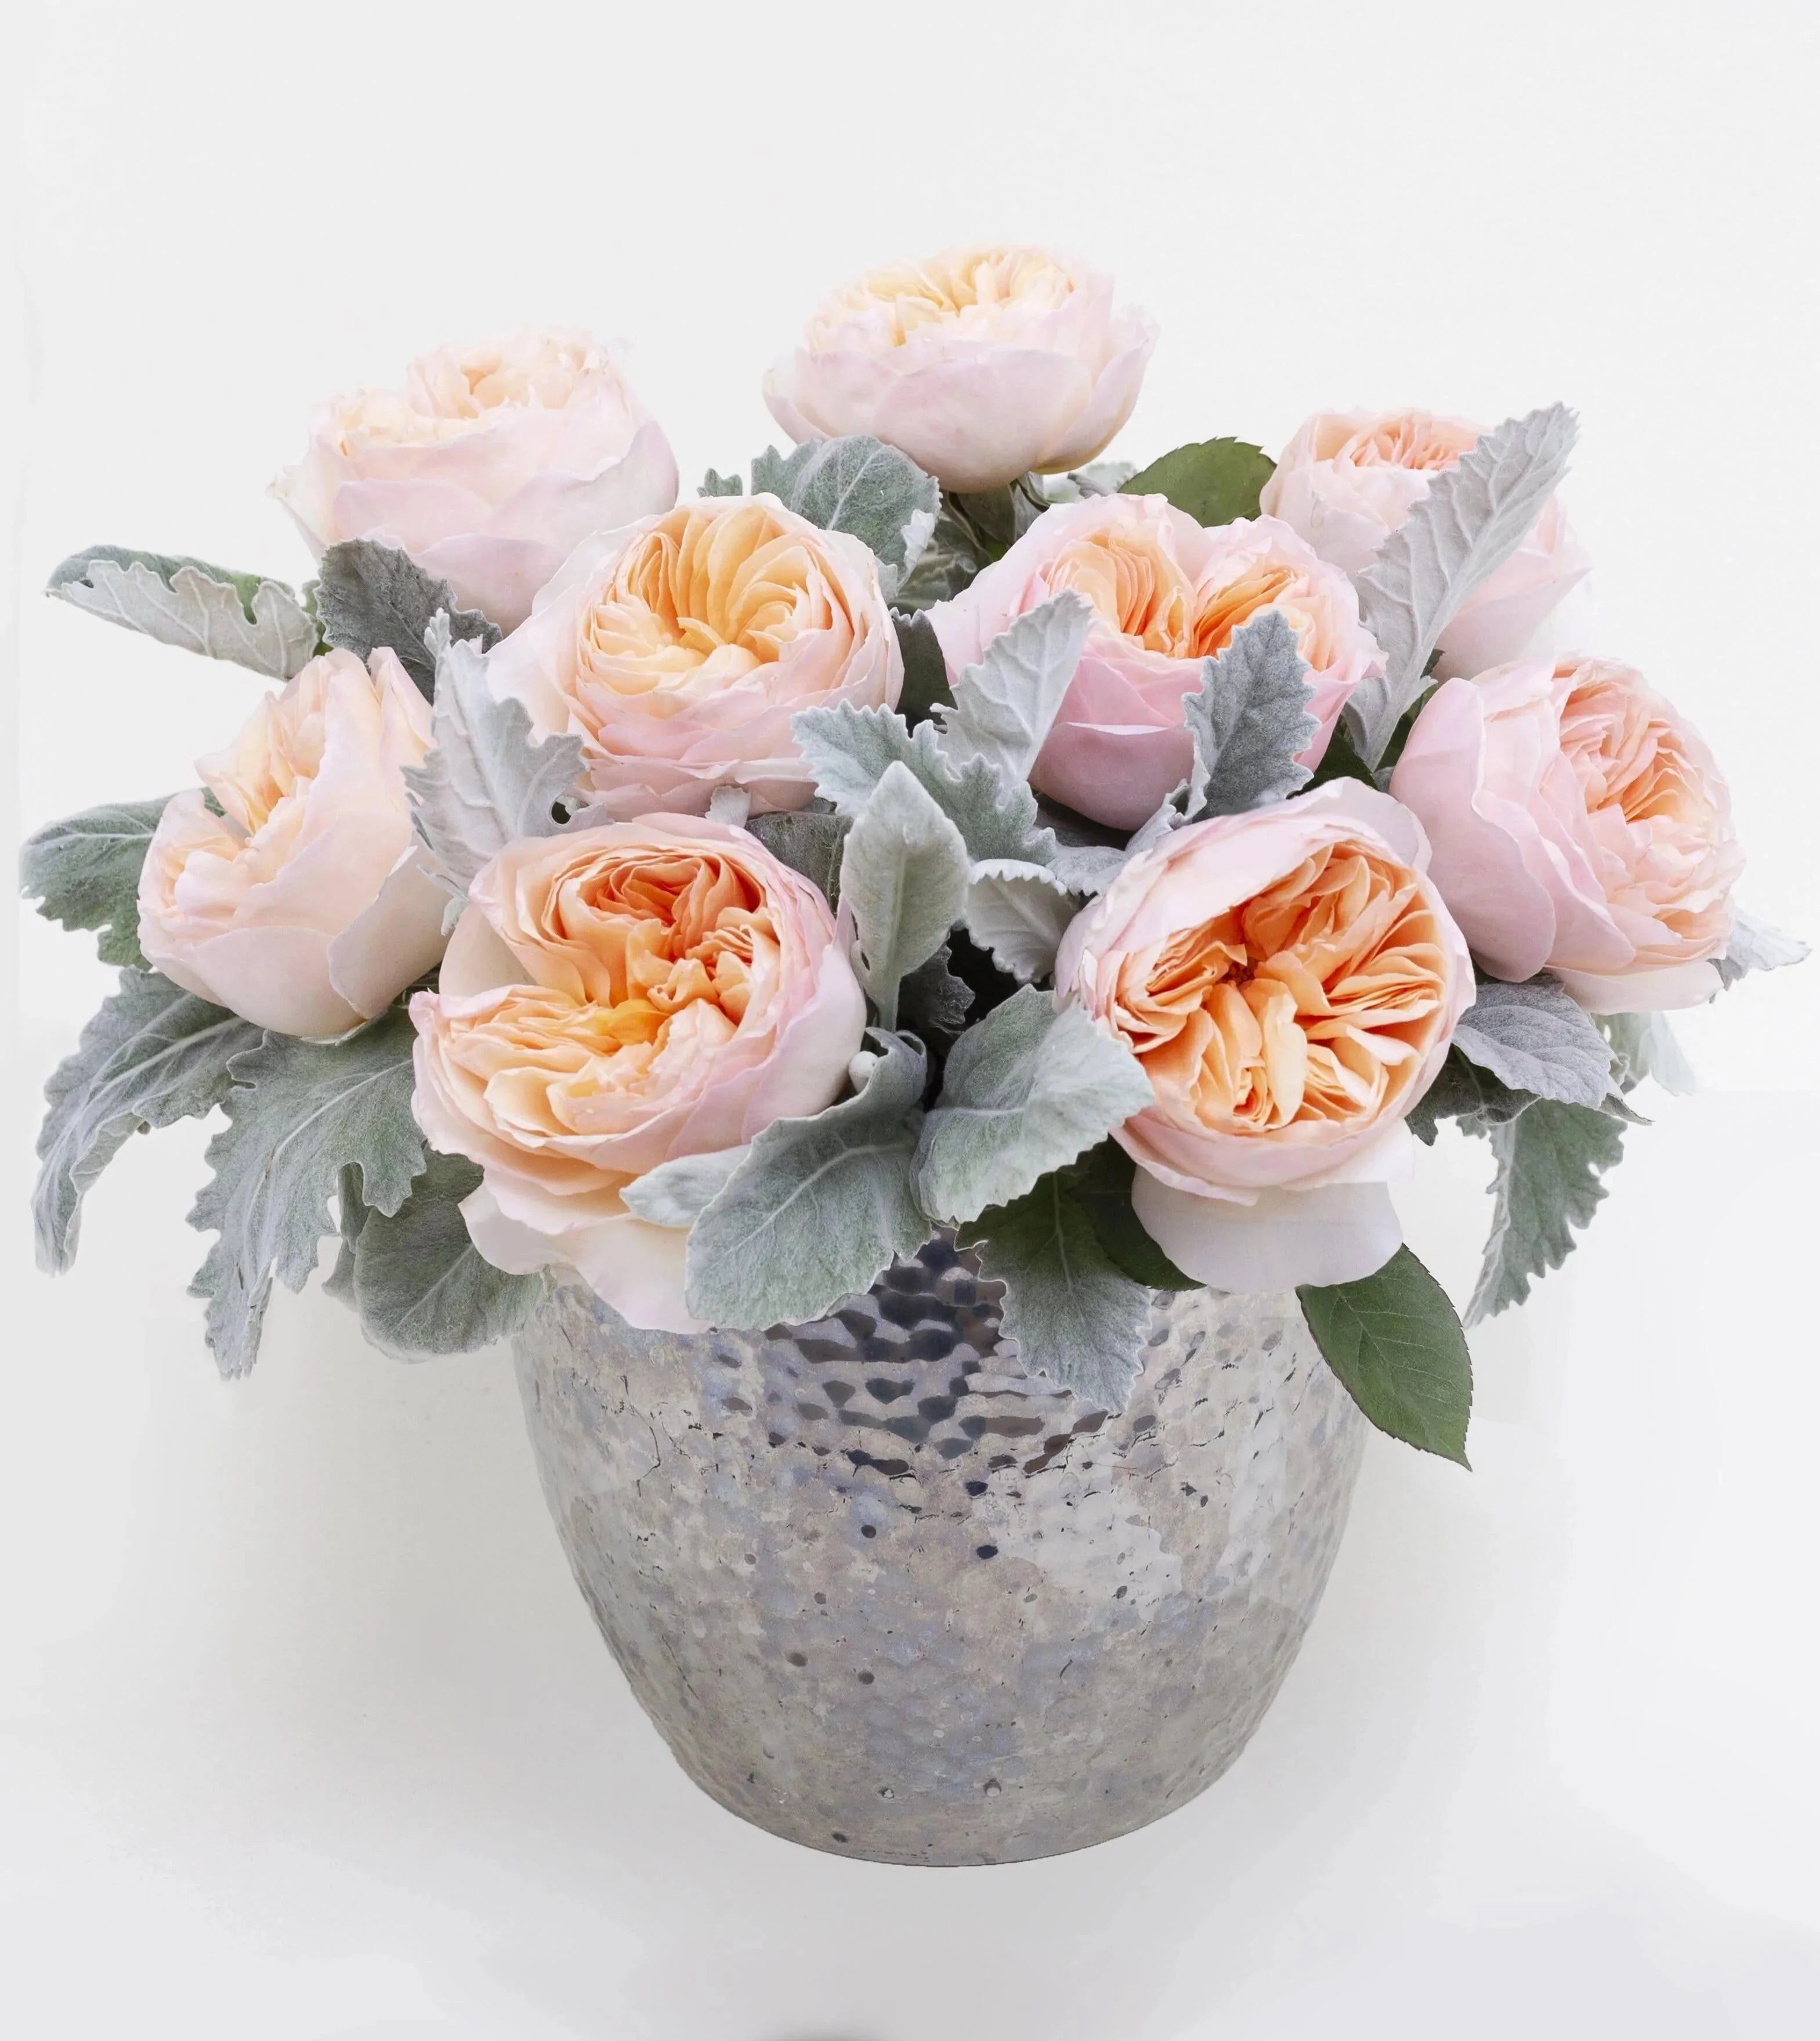 Woodland Beauty Luxury Rose Bouquet Fuller- vase of Juliet Garden Roses and dusty miller